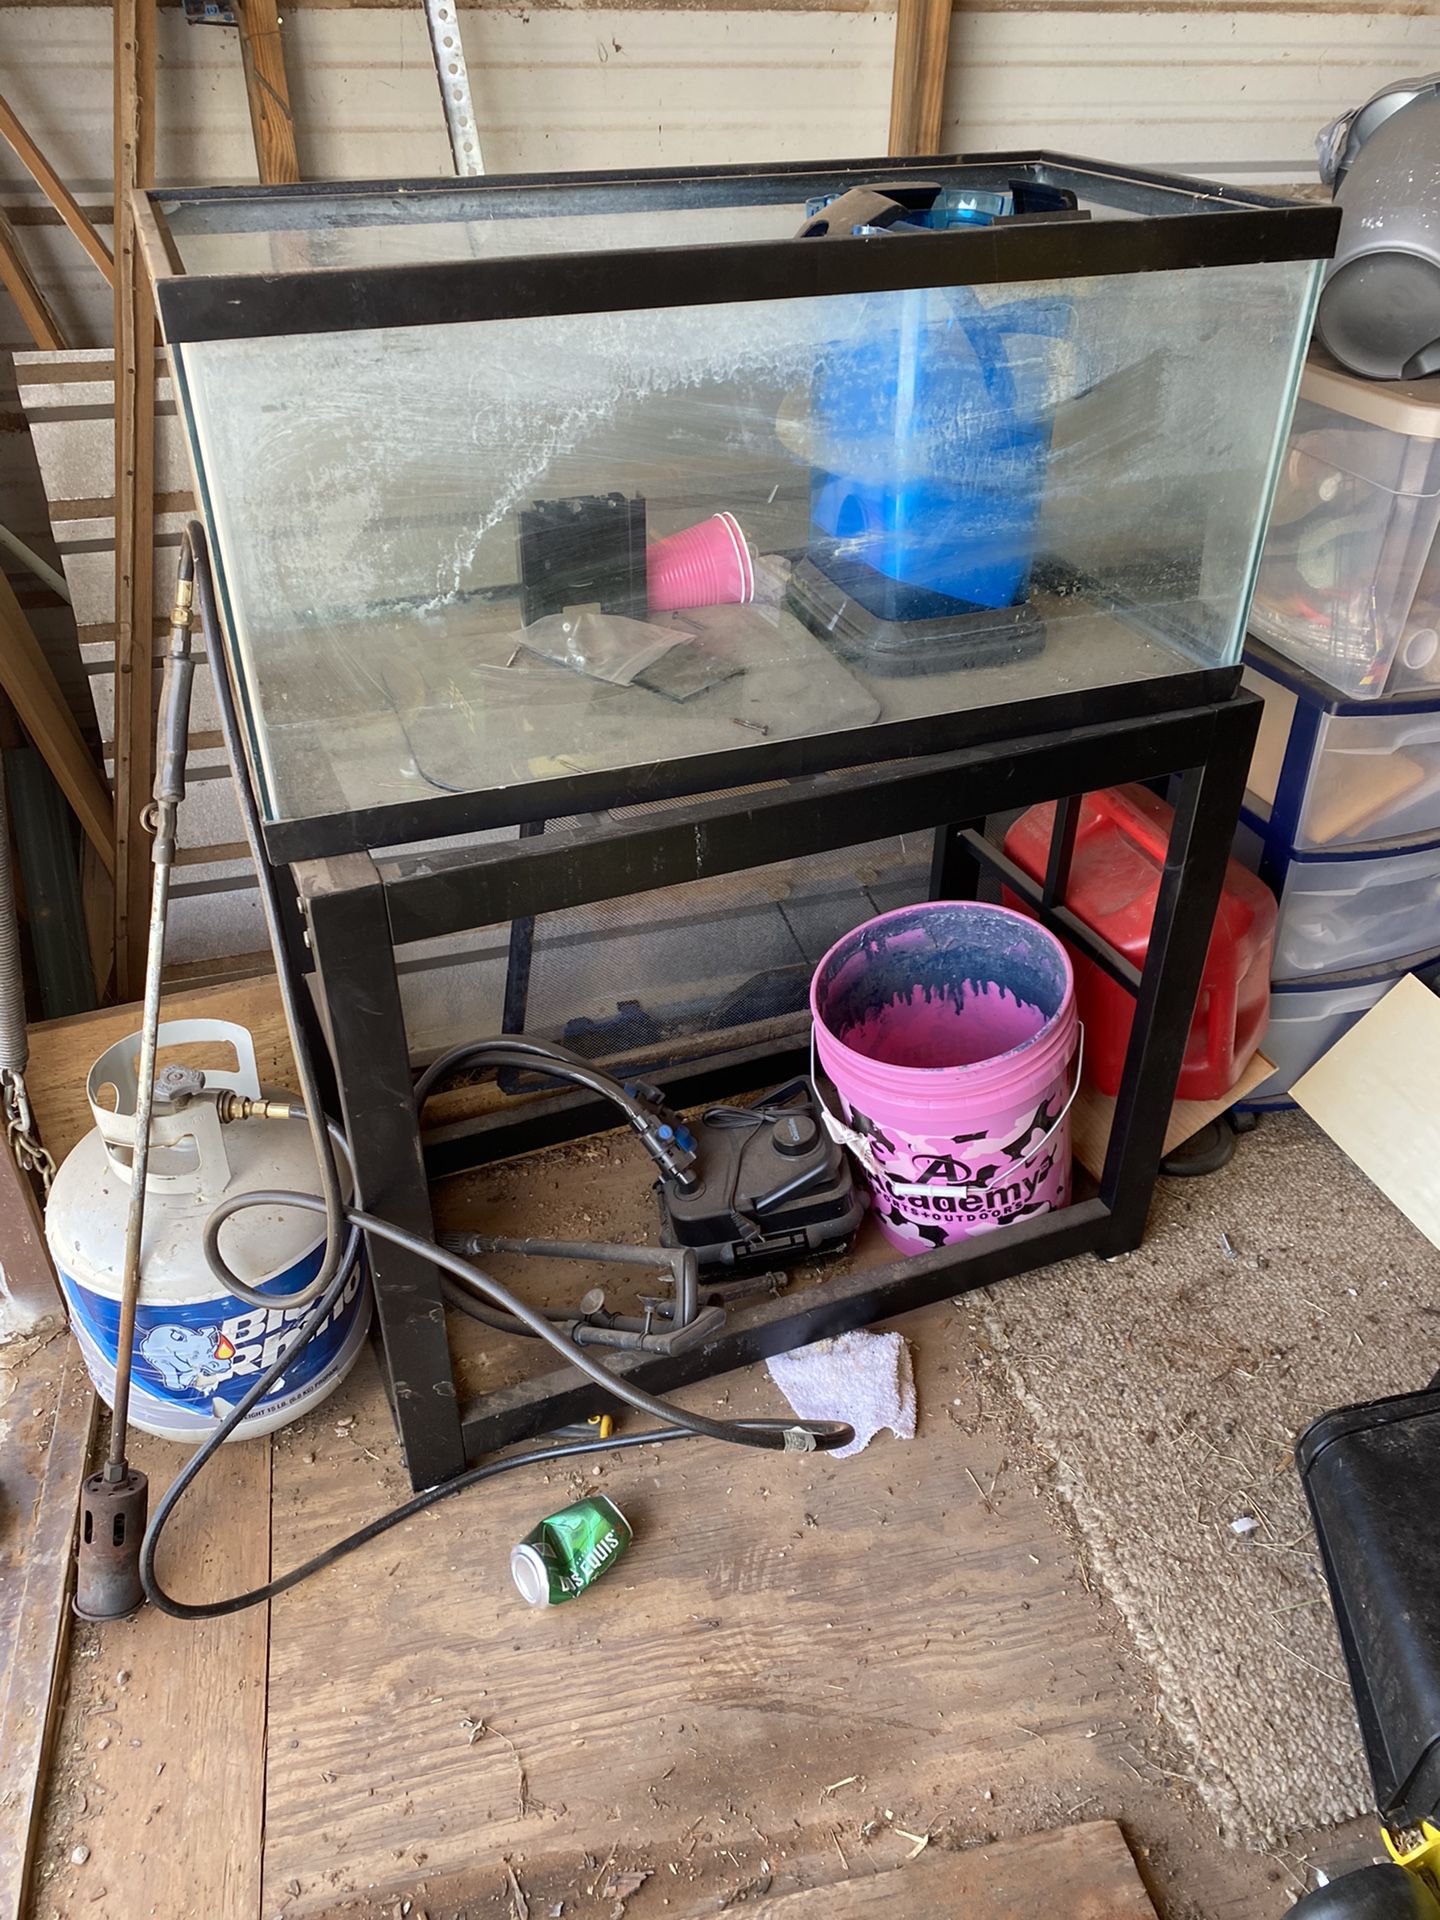 Aquarium, Stand And Pump Filter 